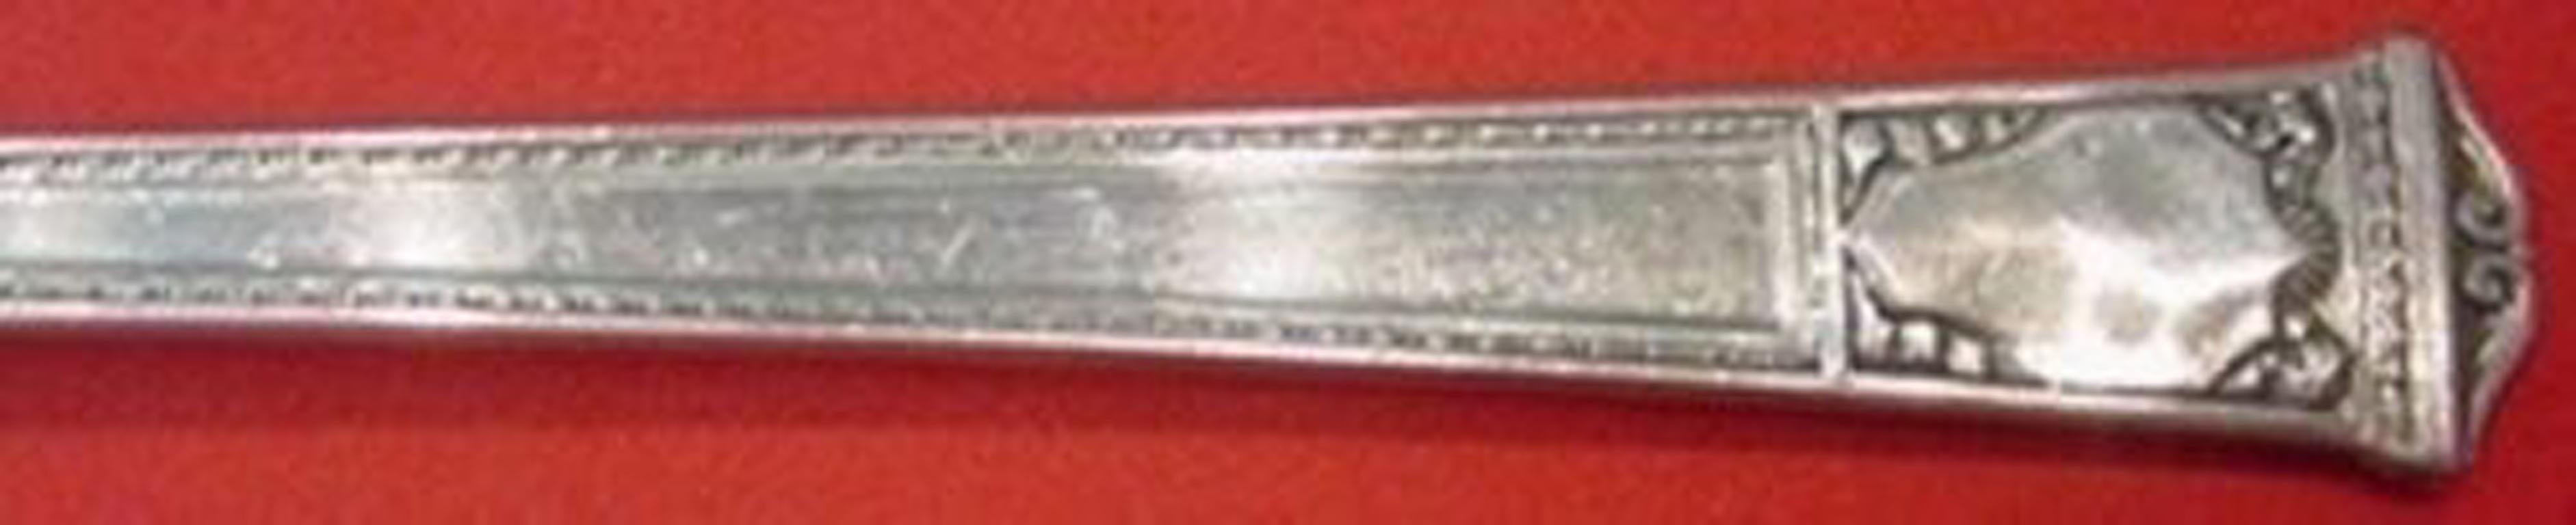 Sterling silver flat handle butter spreader, 6